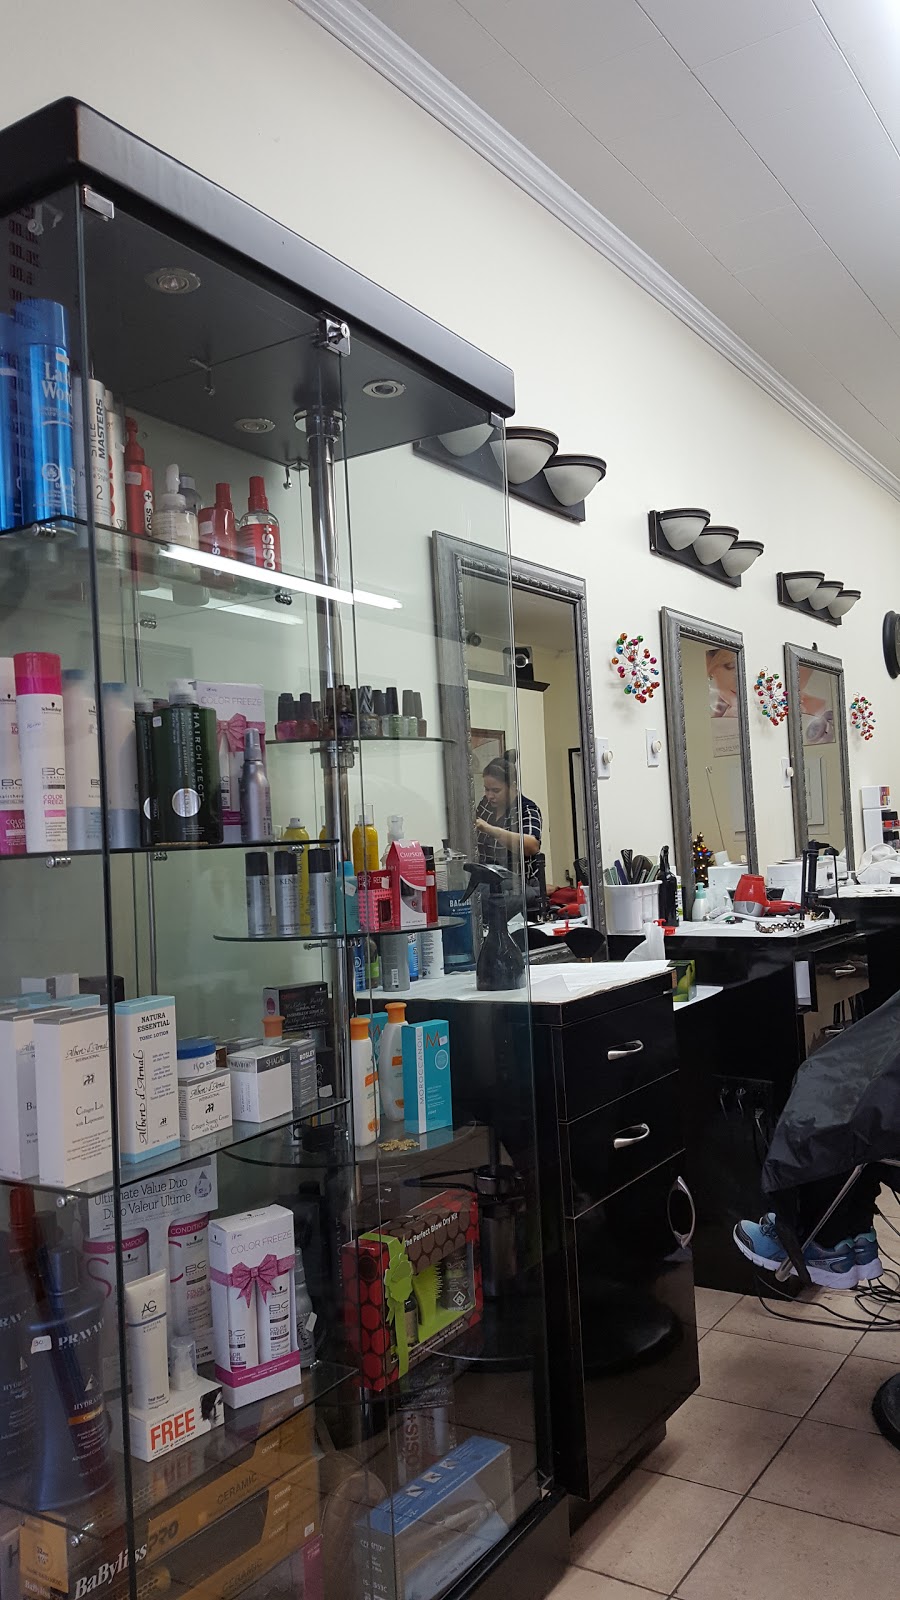 Hair Plus Beauty Salon - 7669 6th St, Burnaby, BC V3N 3M8, Canada